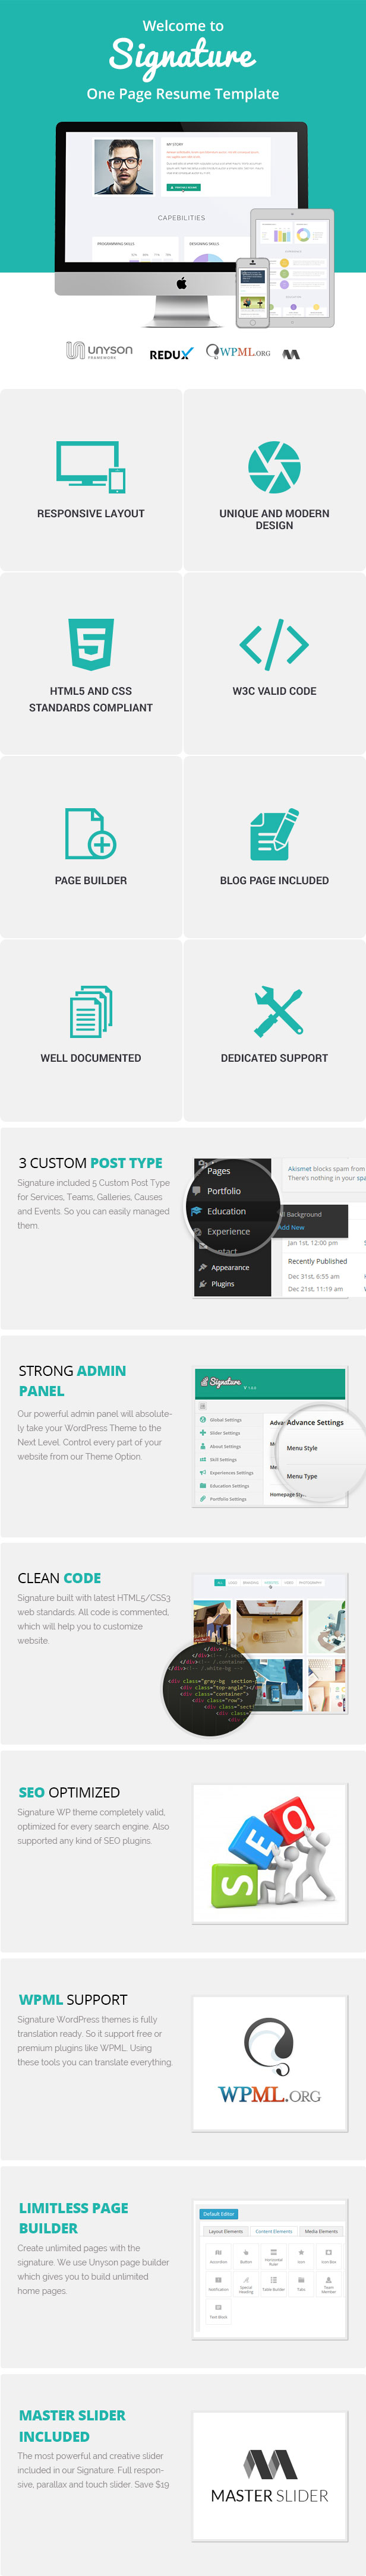 WordPress theme Signature – Responsive CV / Resume WordPress Theme (Portfolio)